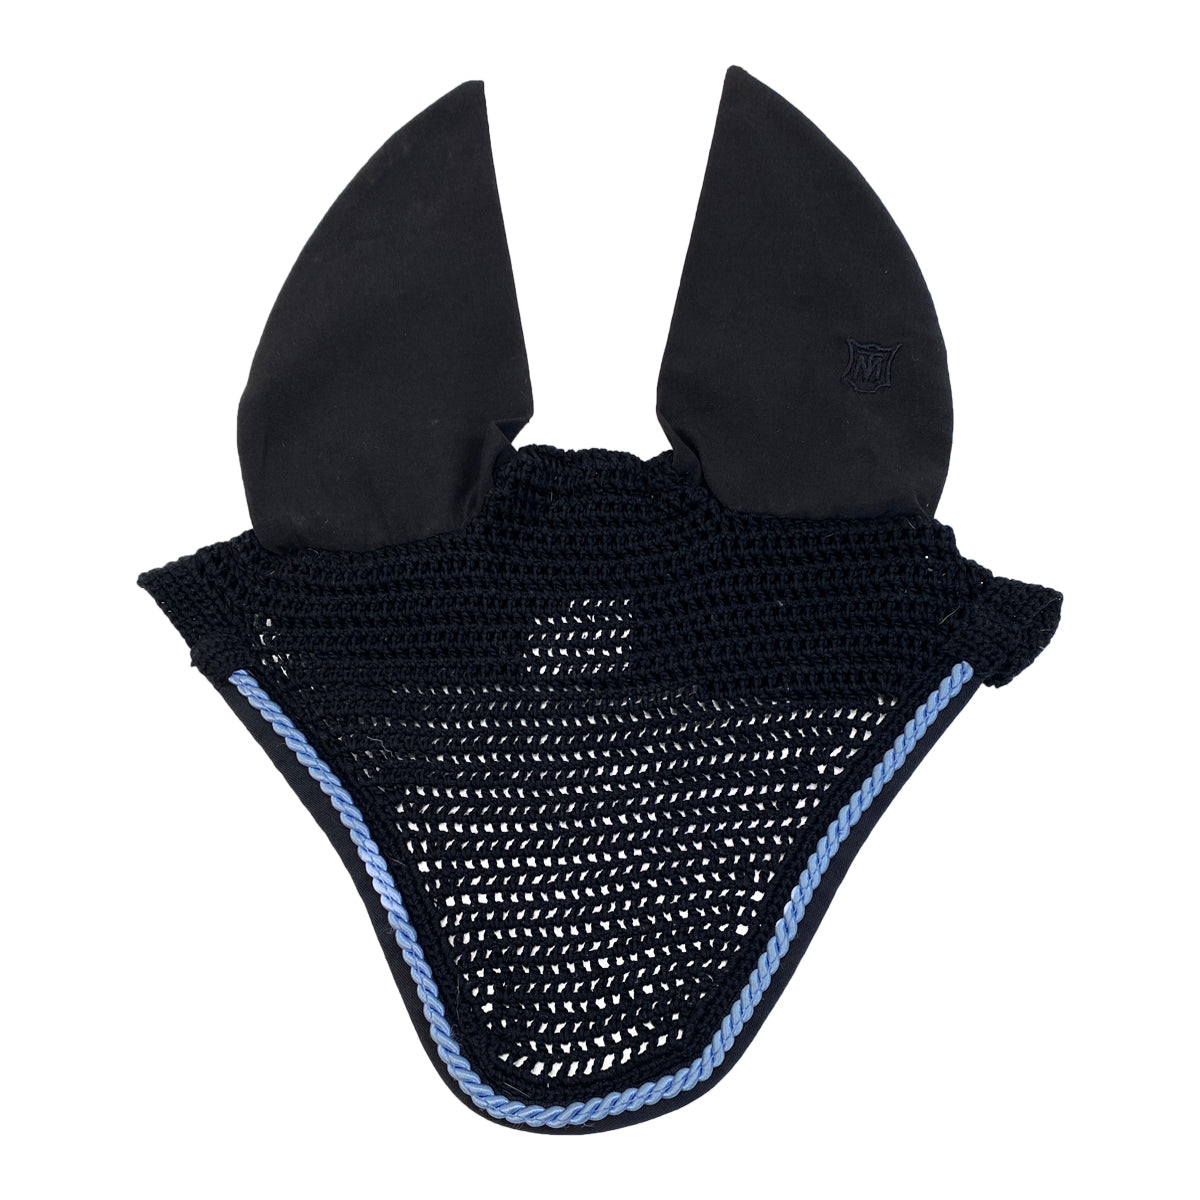 Mattes Custom Fly Bonnet in Black/Ice Blue